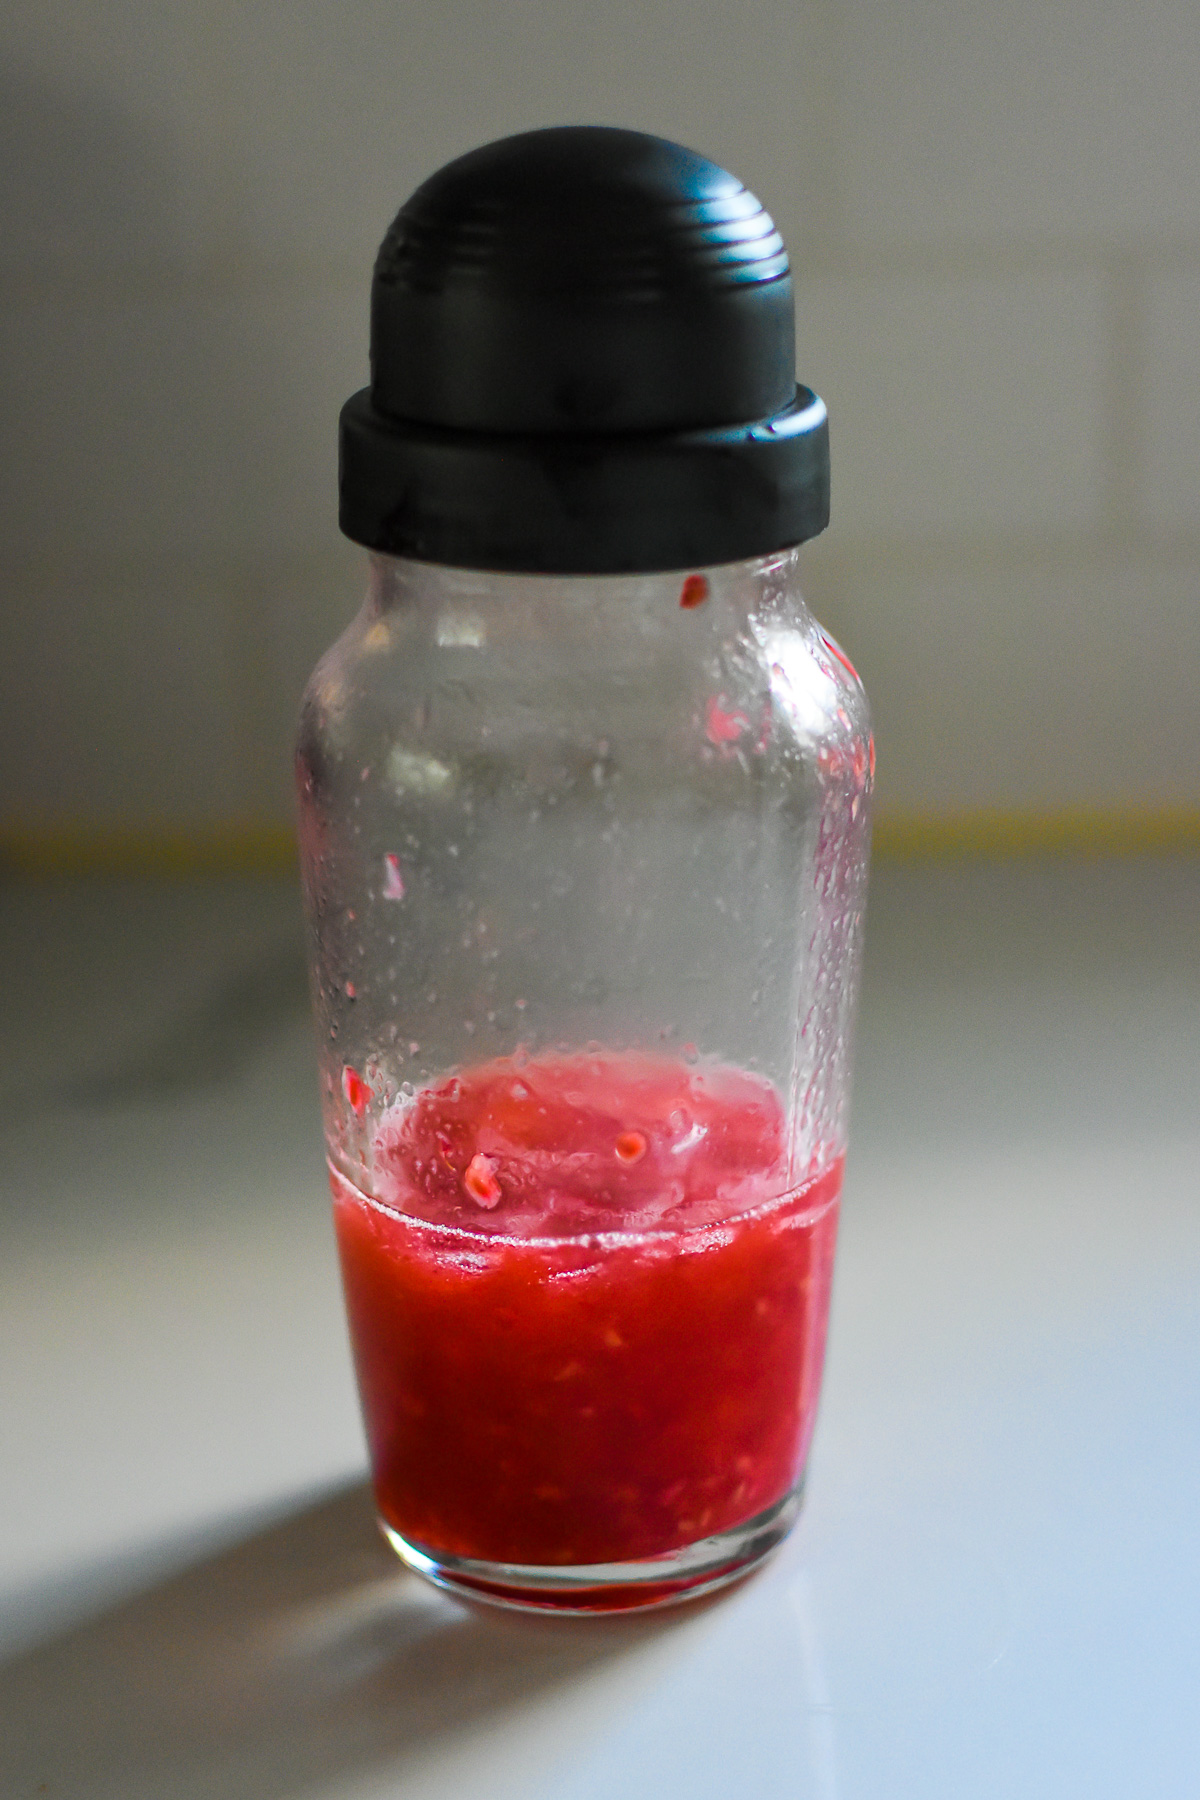 raspberry chambord martini ingredients shaken over ice in cocktail shaker.